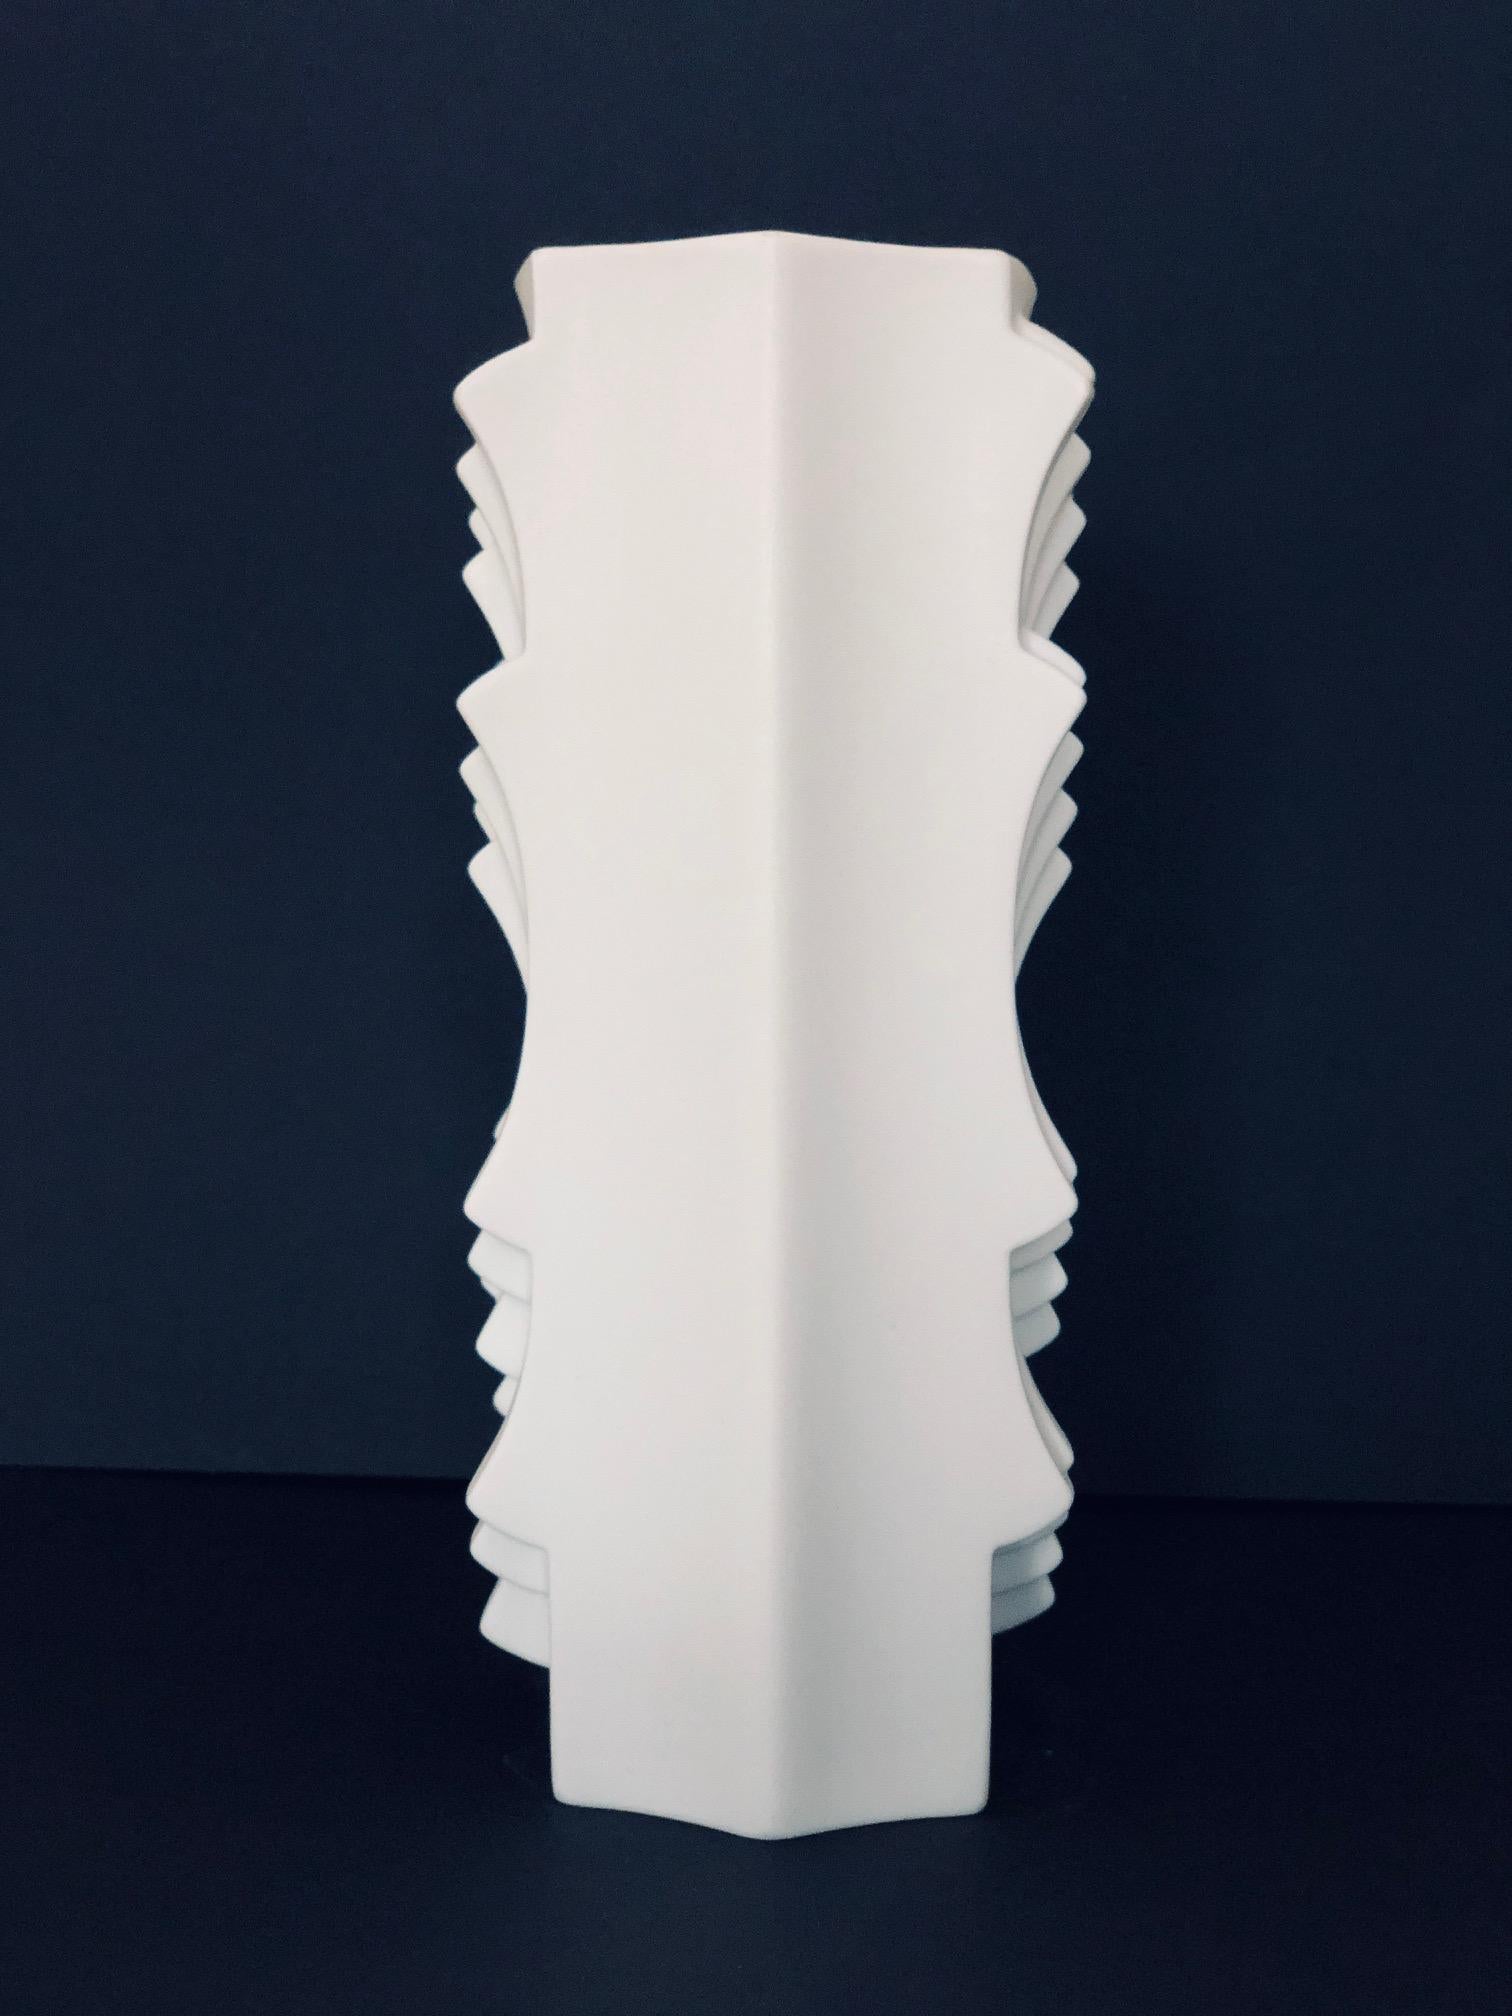 Glazed Matte White Archais Vase by Heinrich Fuchs for Hutschenreuther, 1960s For Sale